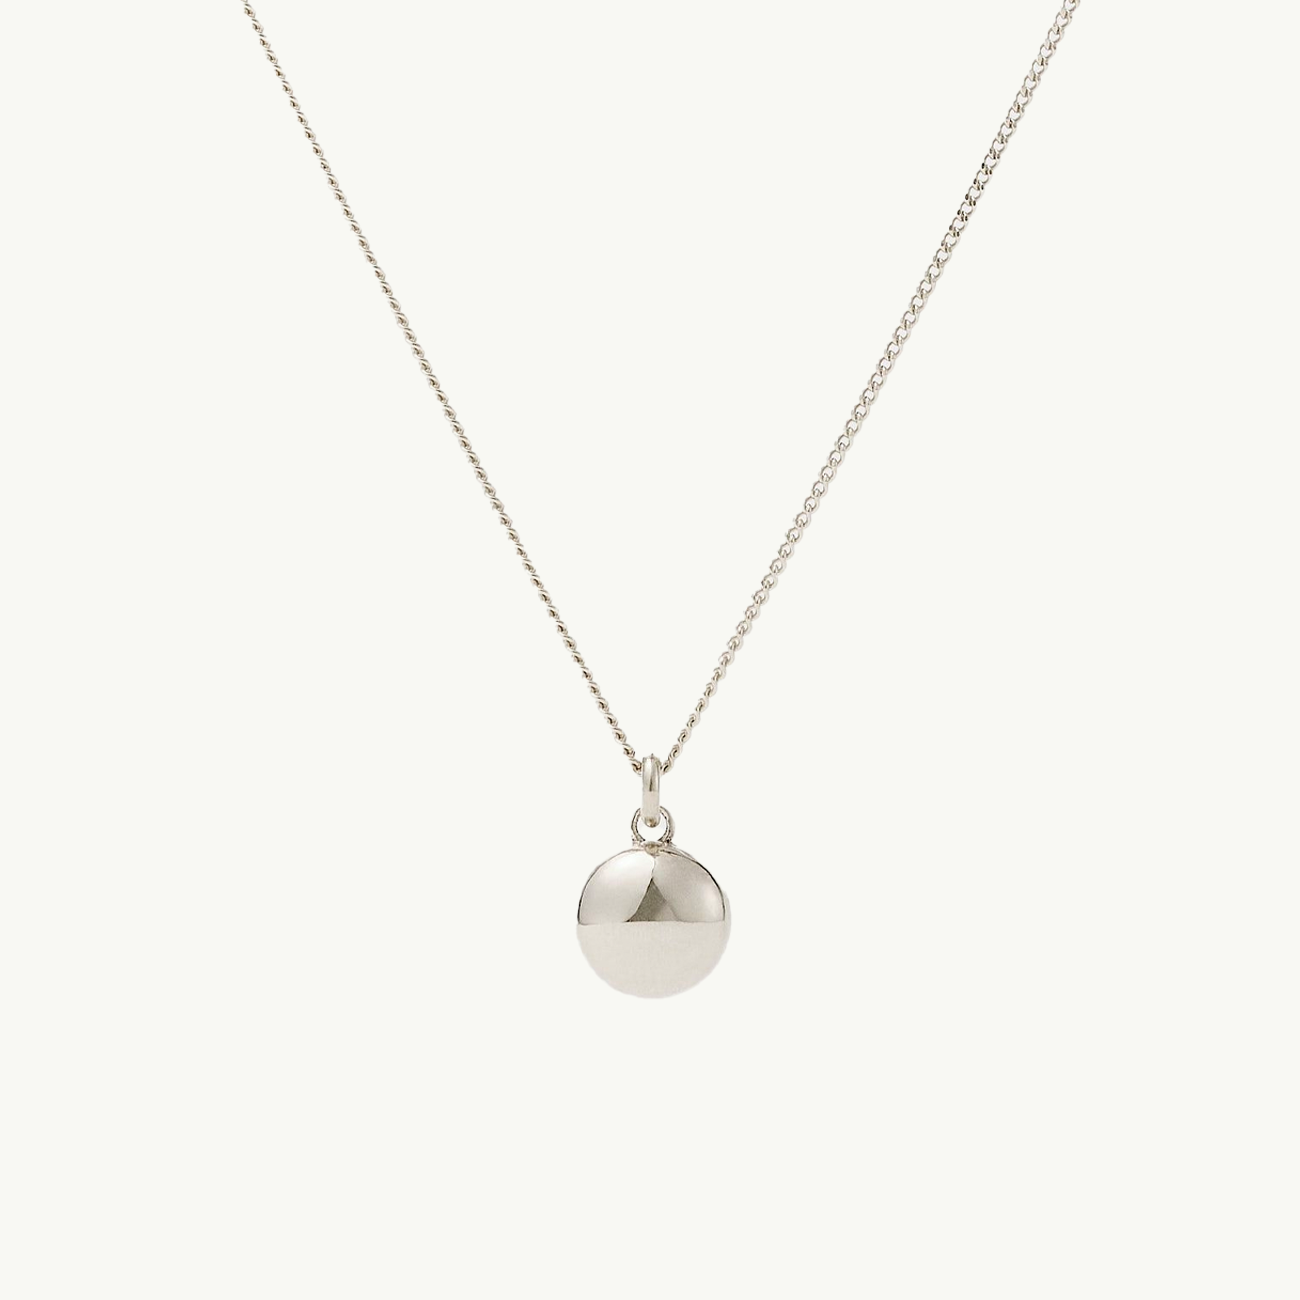 Bobble Necklace - Silver